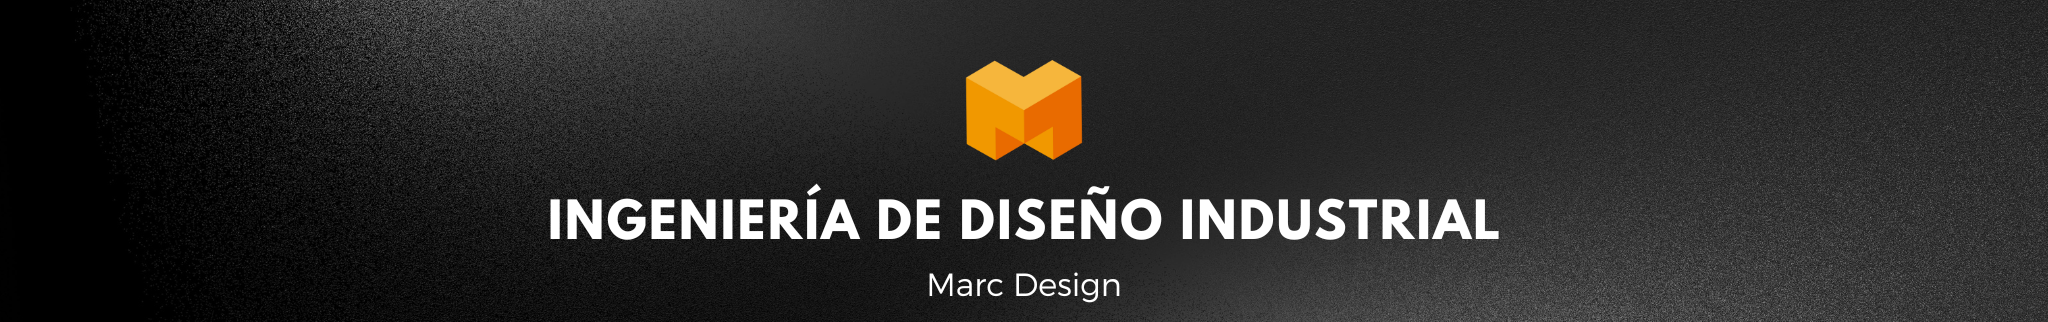 Marc Design's profile banner